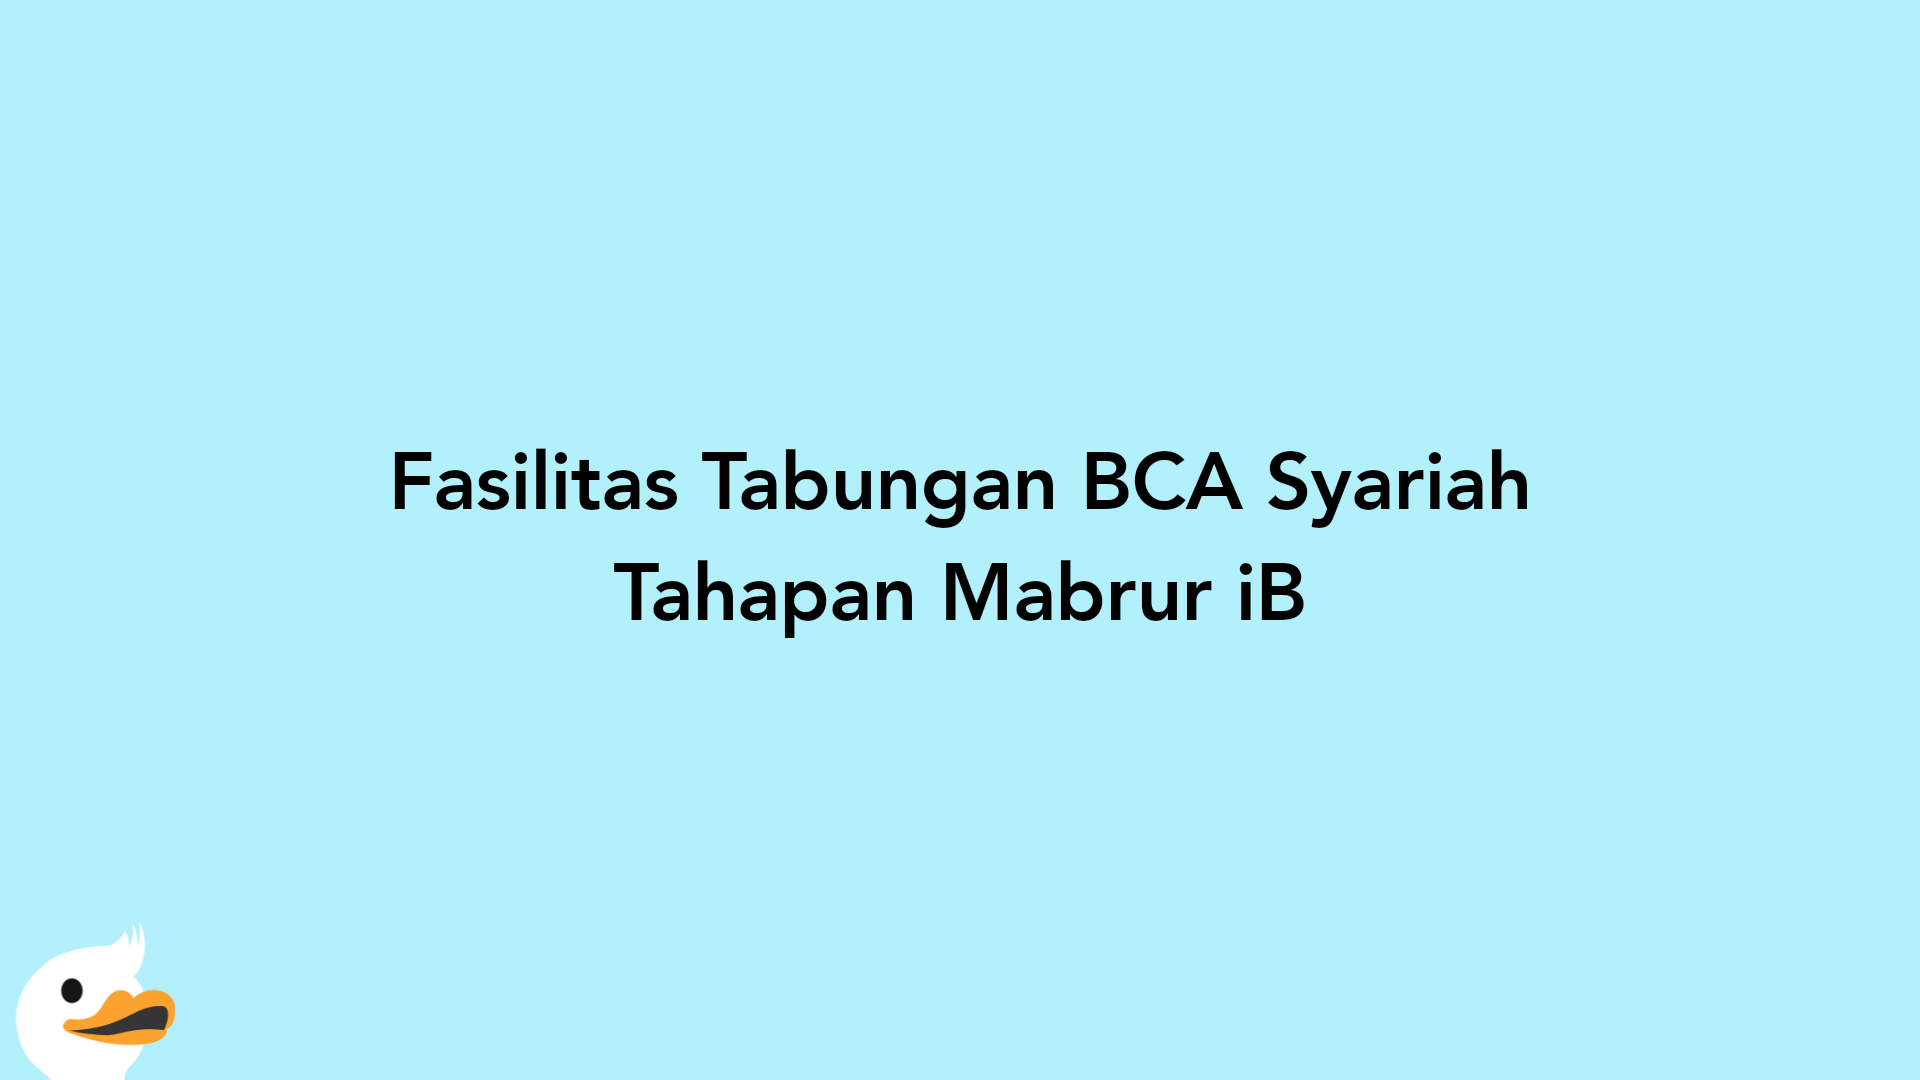 Fasilitas Tabungan BCA Syariah Tahapan Mabrur iB